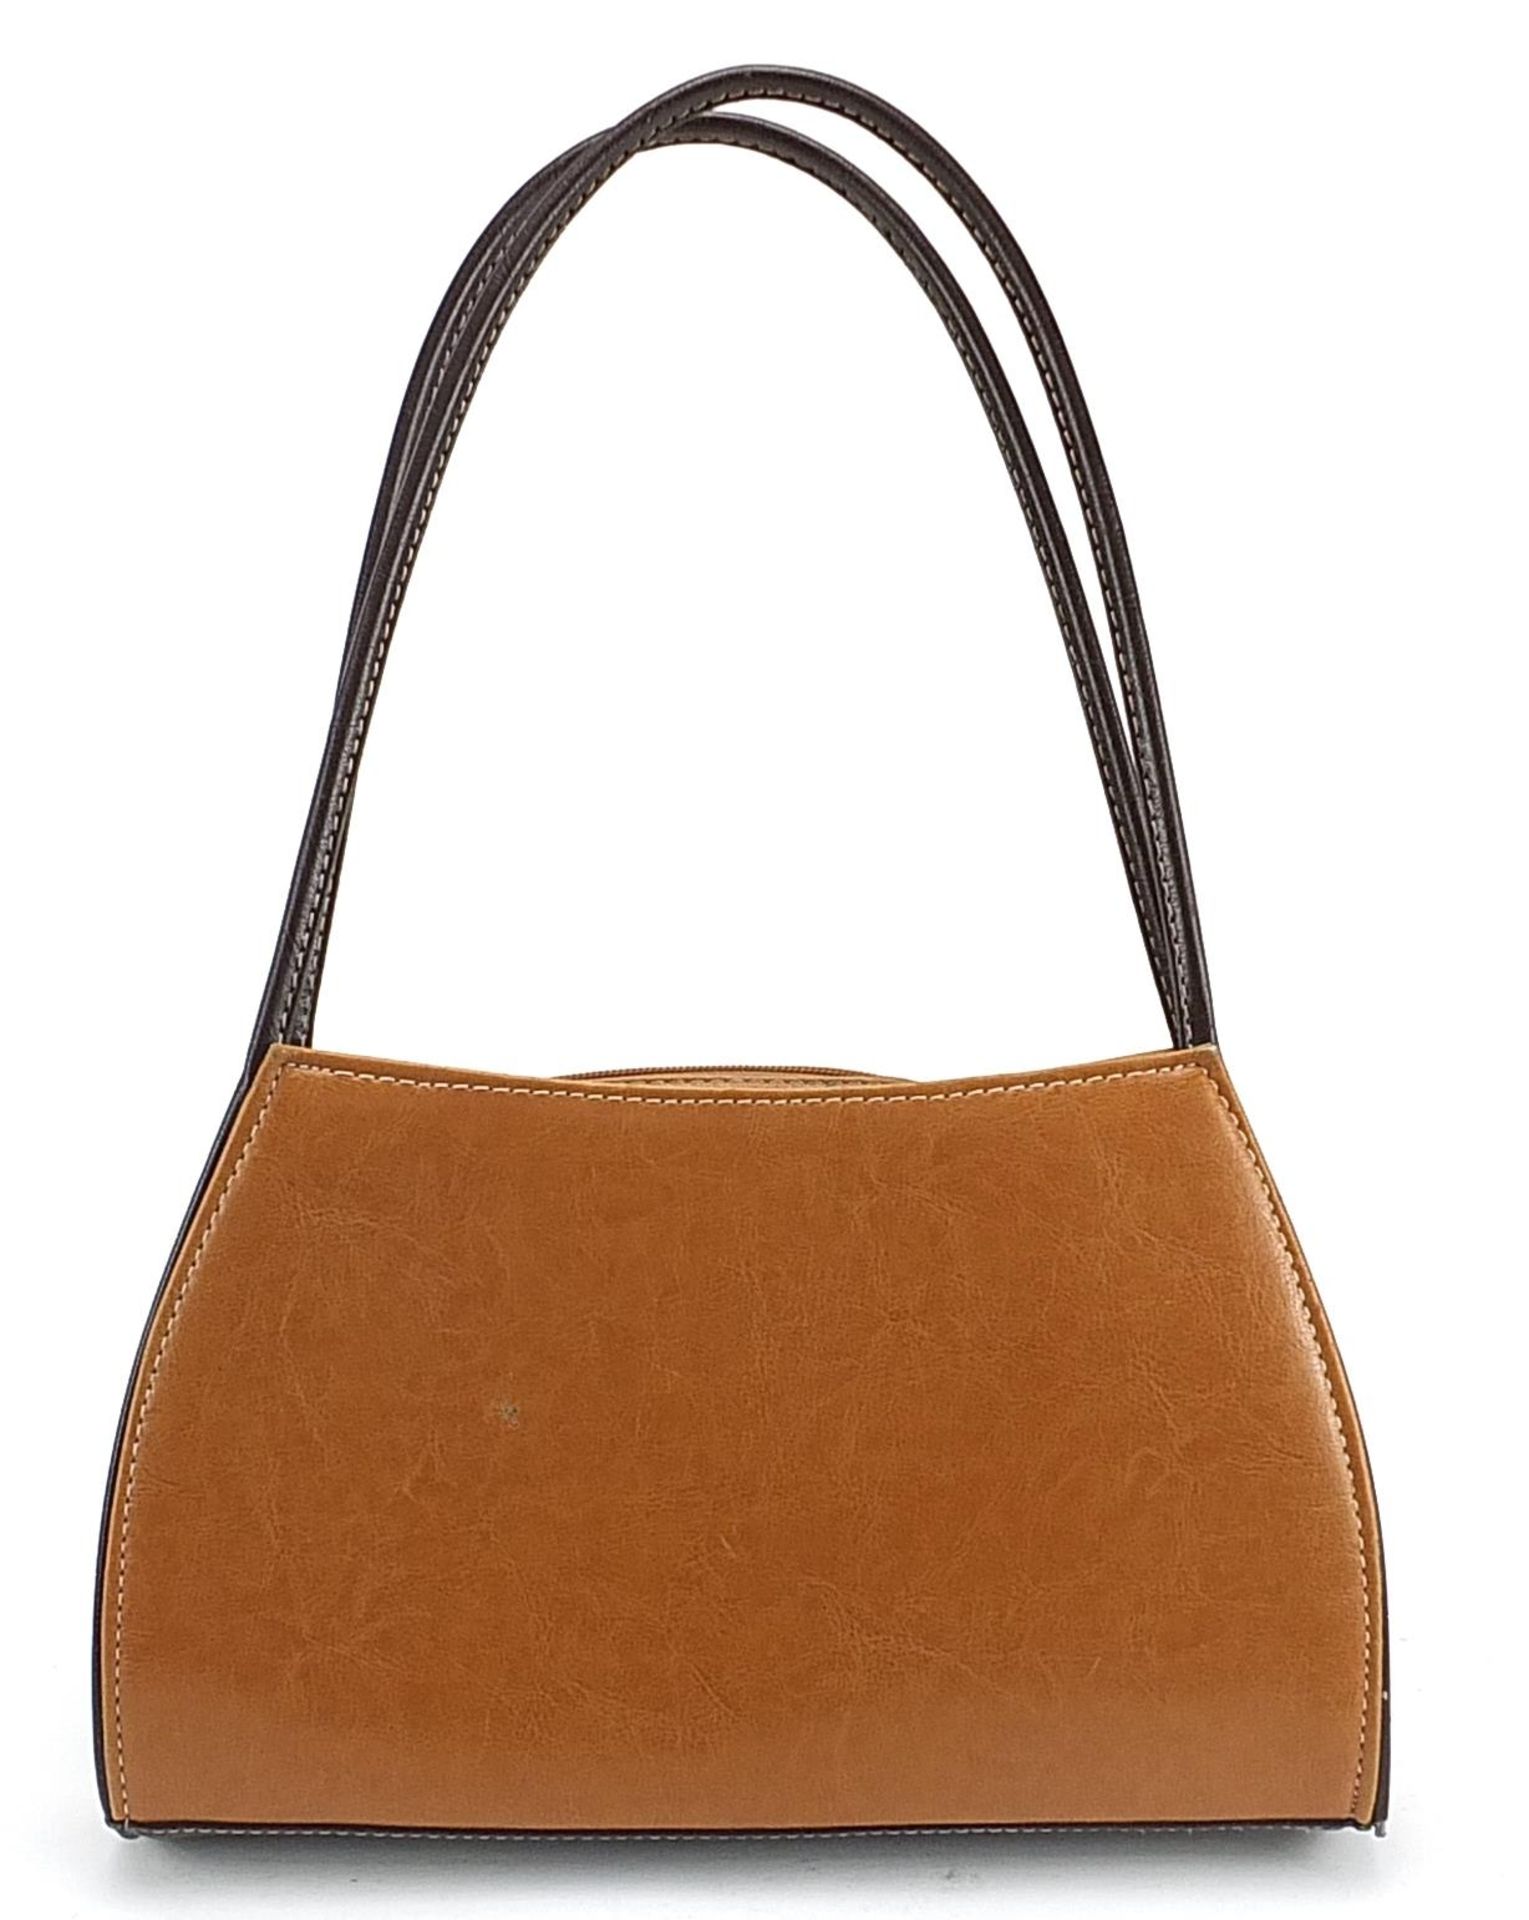 Vintage ladies' Gucci handbag, 43cm high - Image 2 of 3